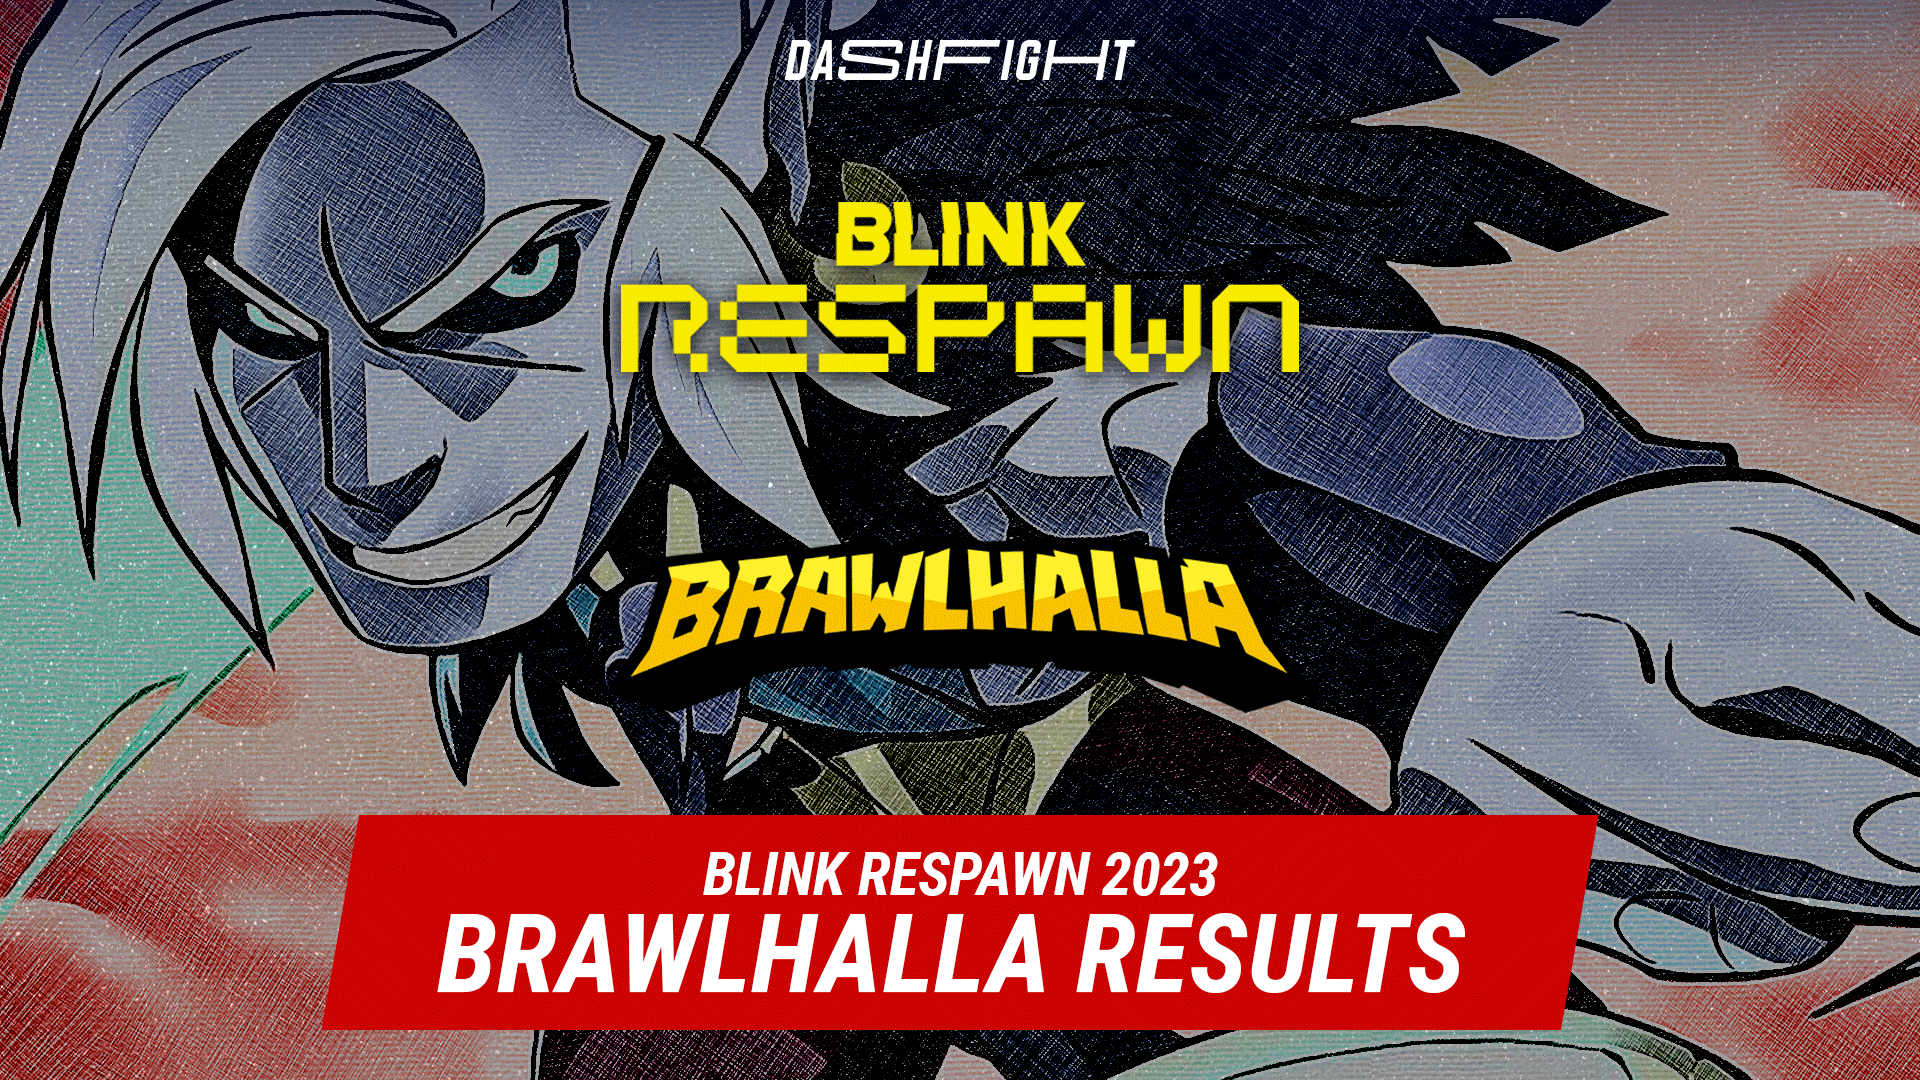 Blink Respawn 2023 Brawlhalla Results